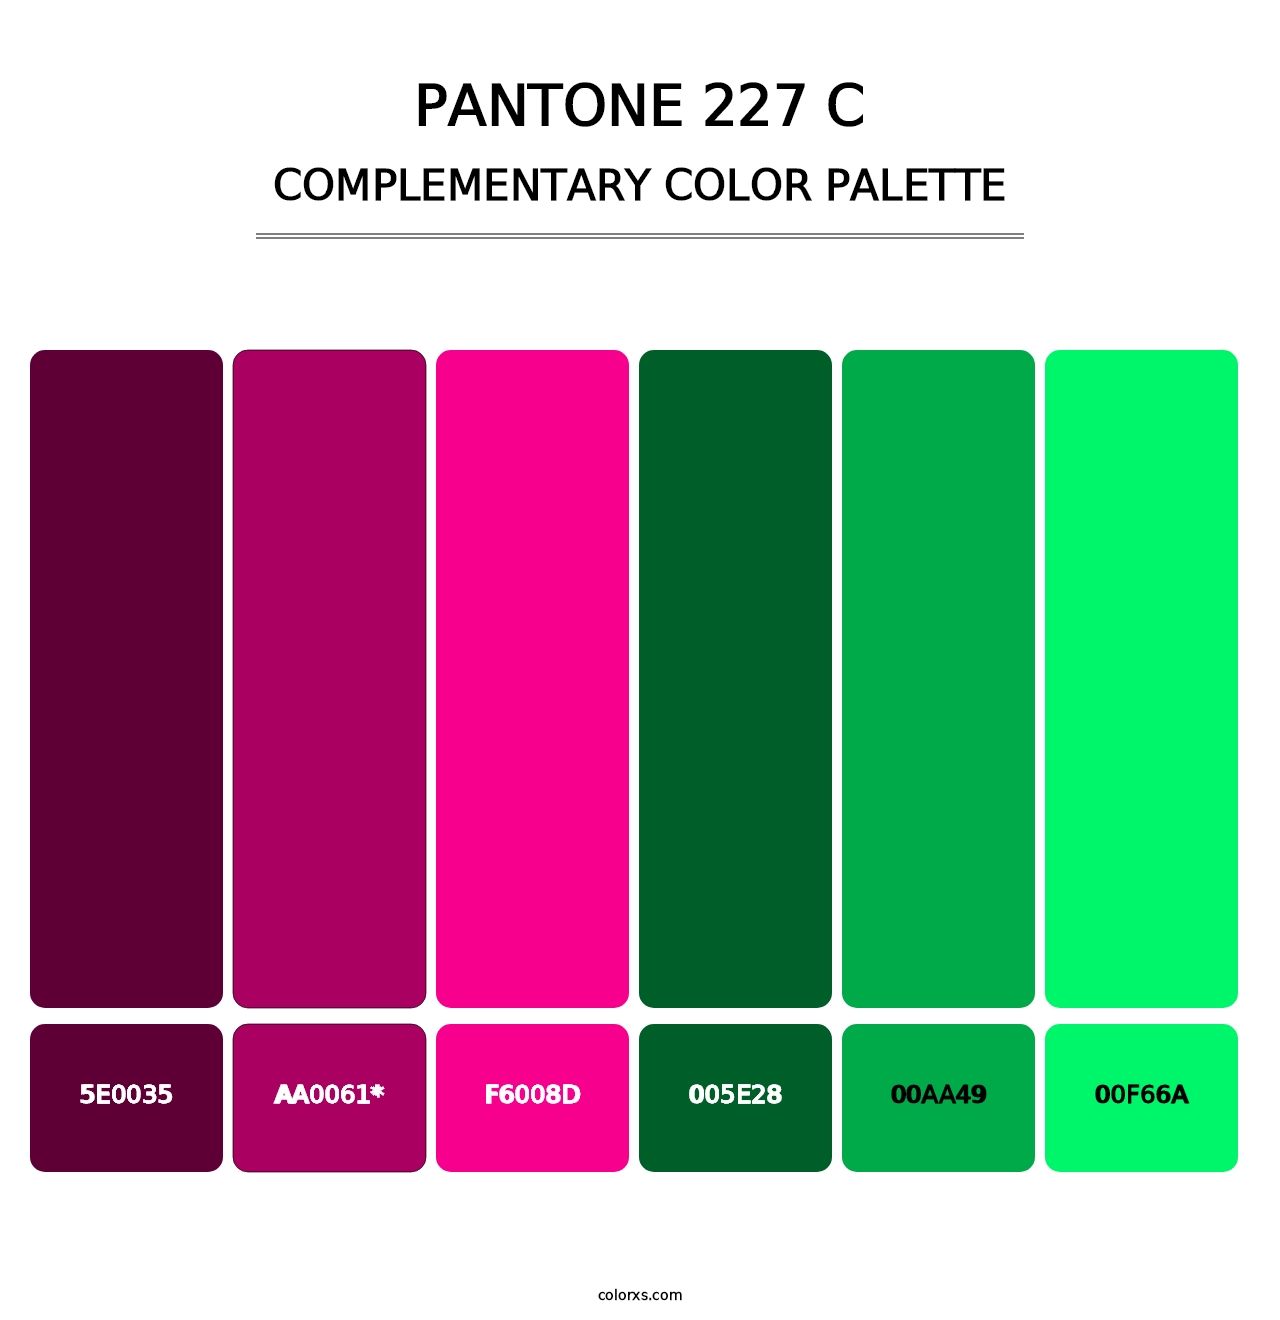 PANTONE 227 C - Complementary Color Palette